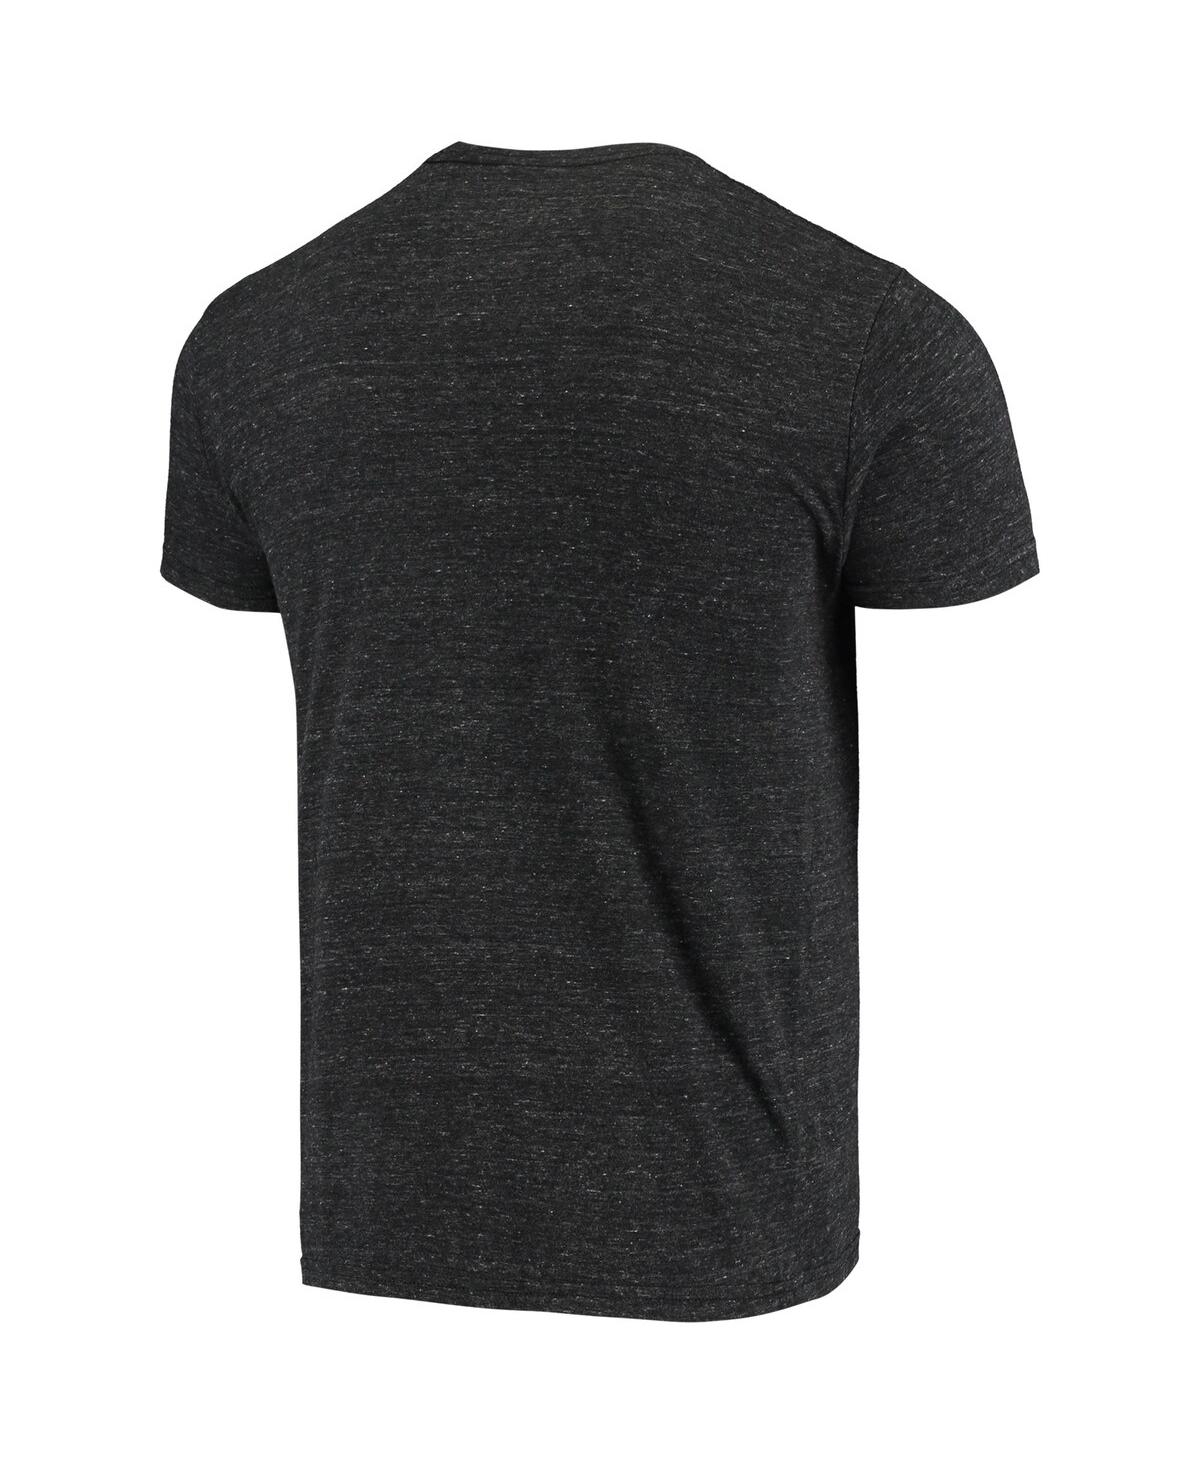 Shop Retro Brand Men's Original  Heathered Black Minnesota United Fc Area Code Tri-blend T-shirt